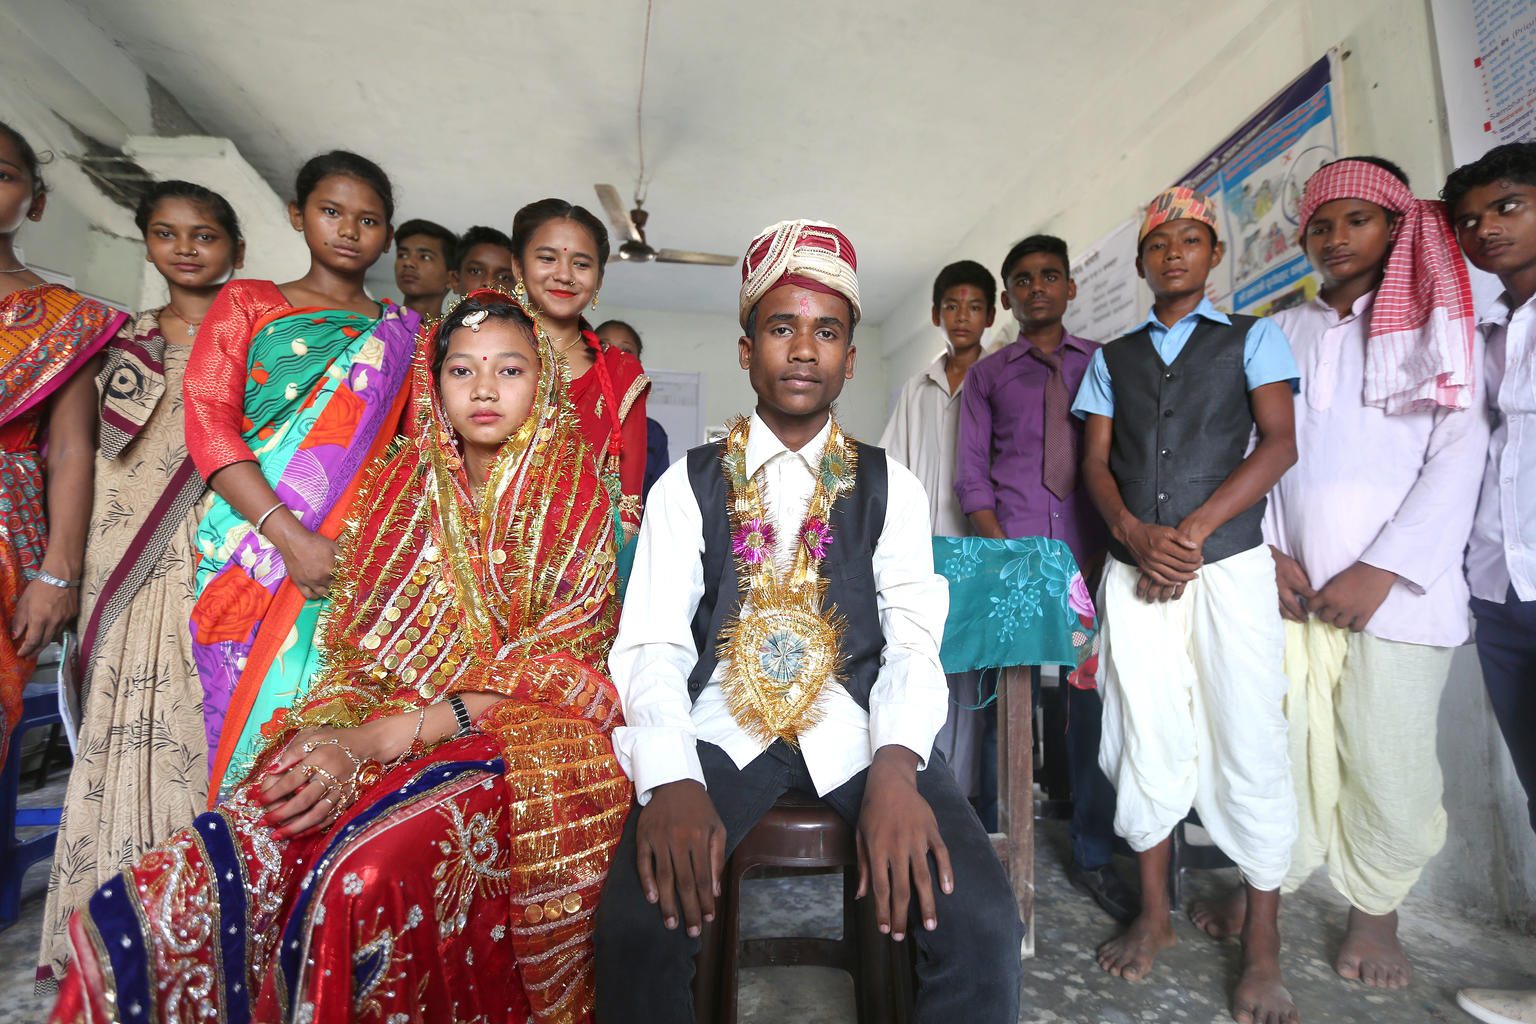 115 million men and boys married as children – UNICEF